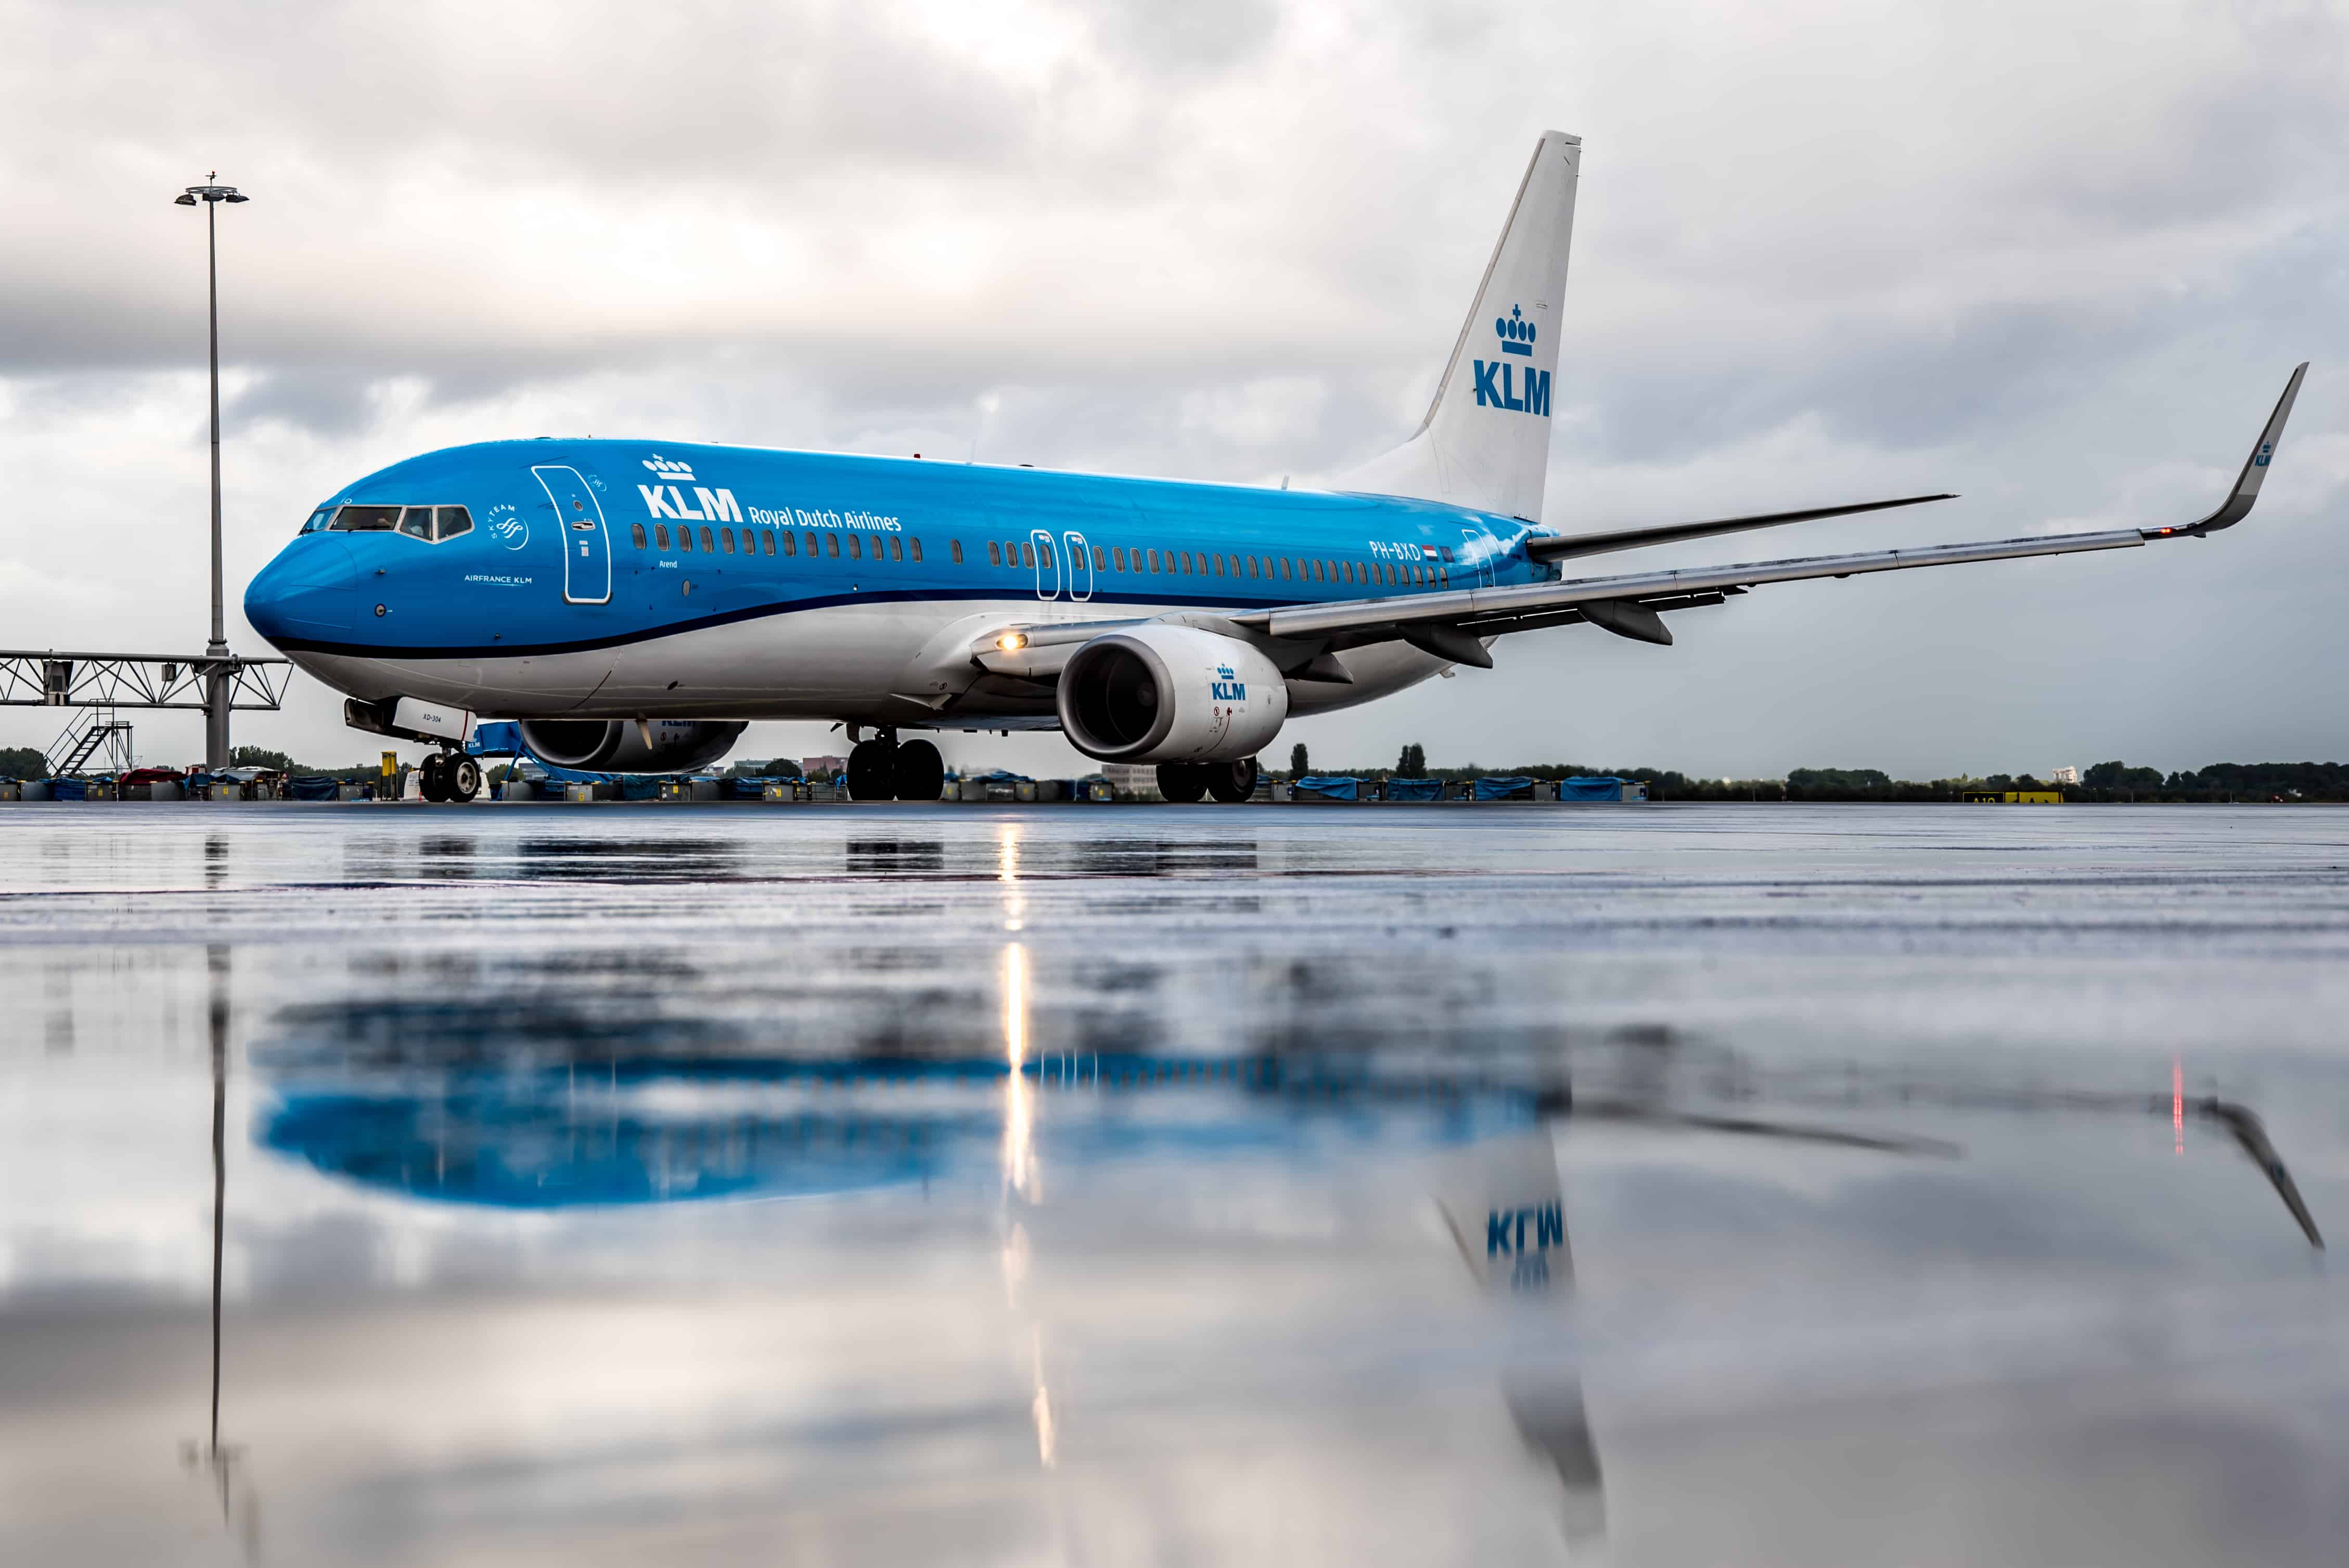 KLM flight, fly responsibly